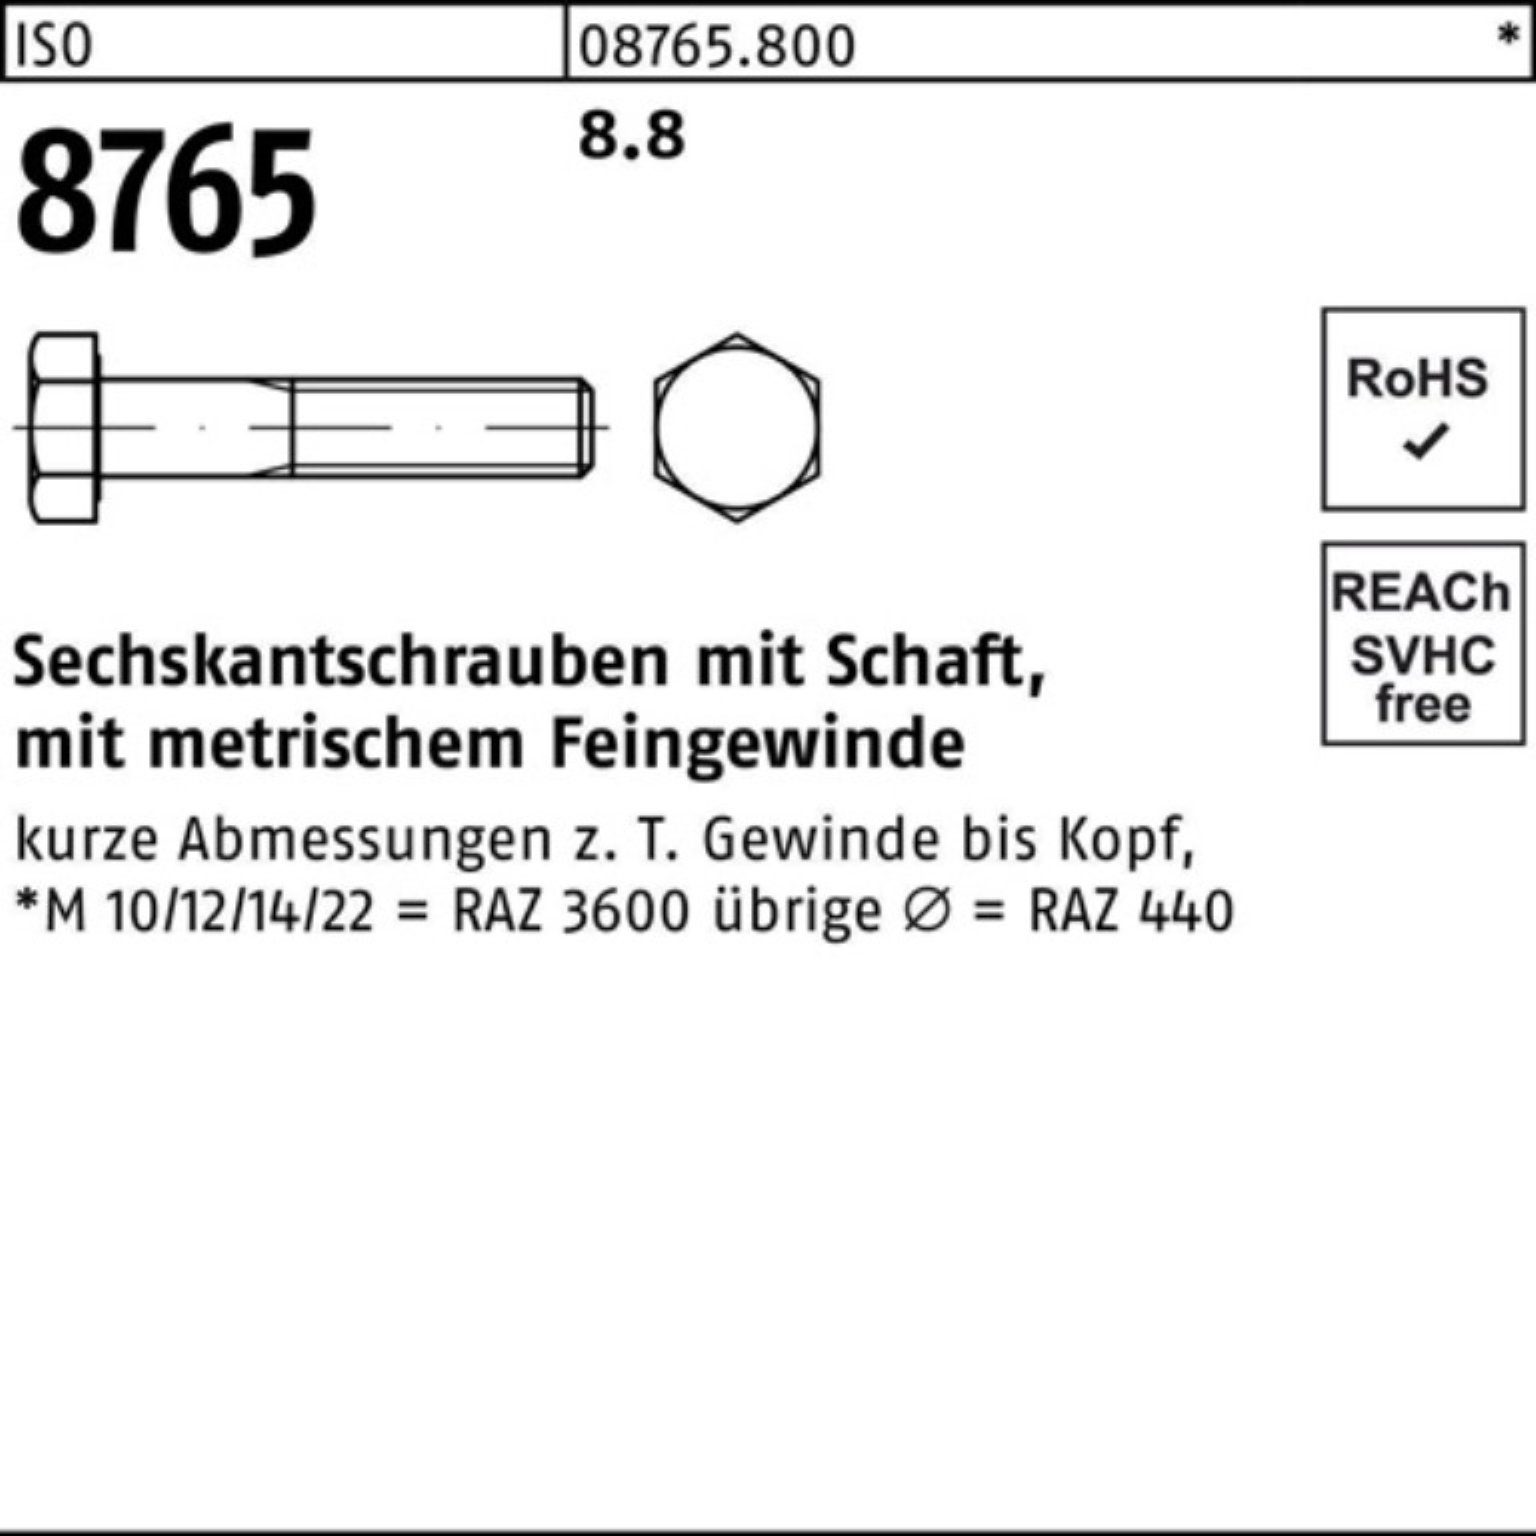 Sechskantschraube Pack 8765 M10x1,25x 100er Stü 55 Reyher Schaft ISO 100 8.8 Sechskantschraube